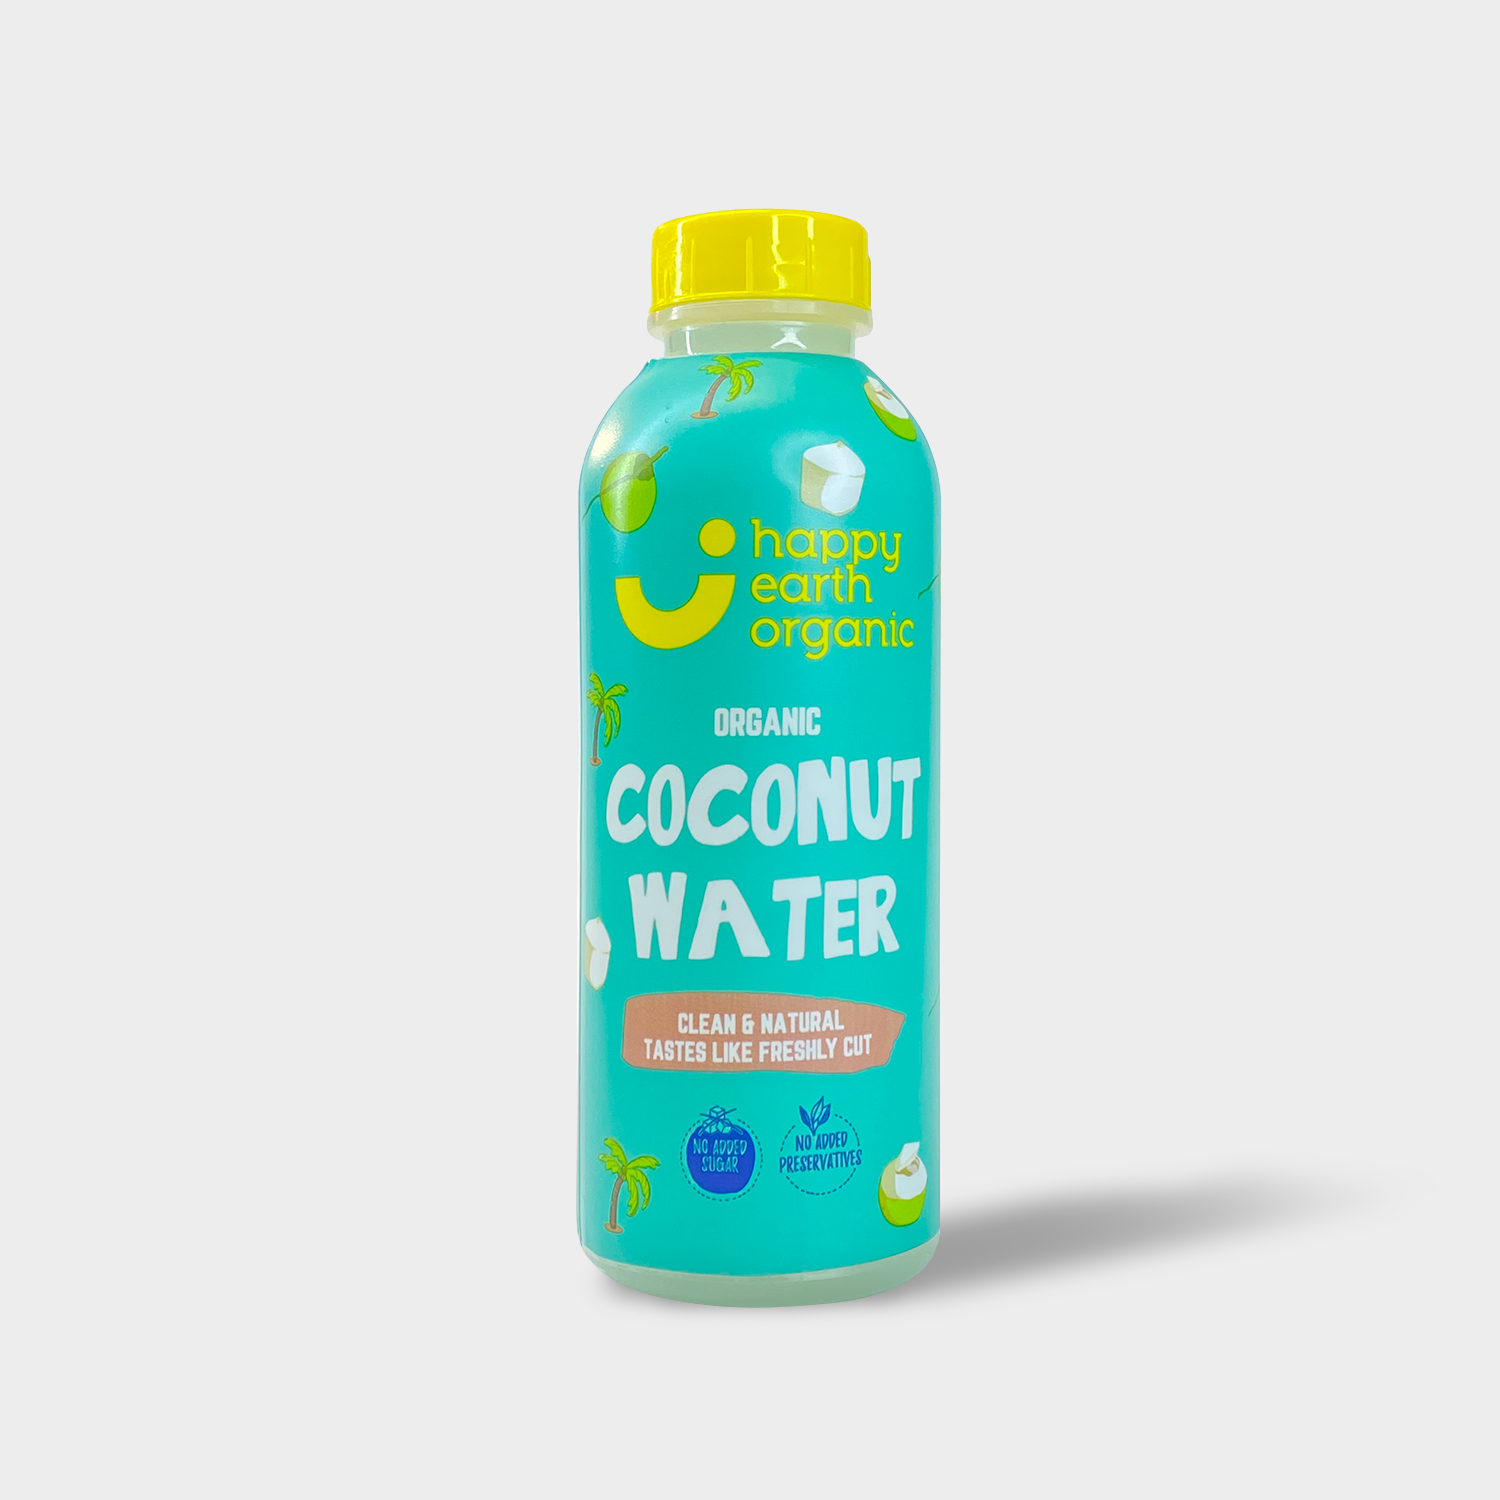 HAPPY EARTH Organic Coconut Water, 250ml - Organic, Natural